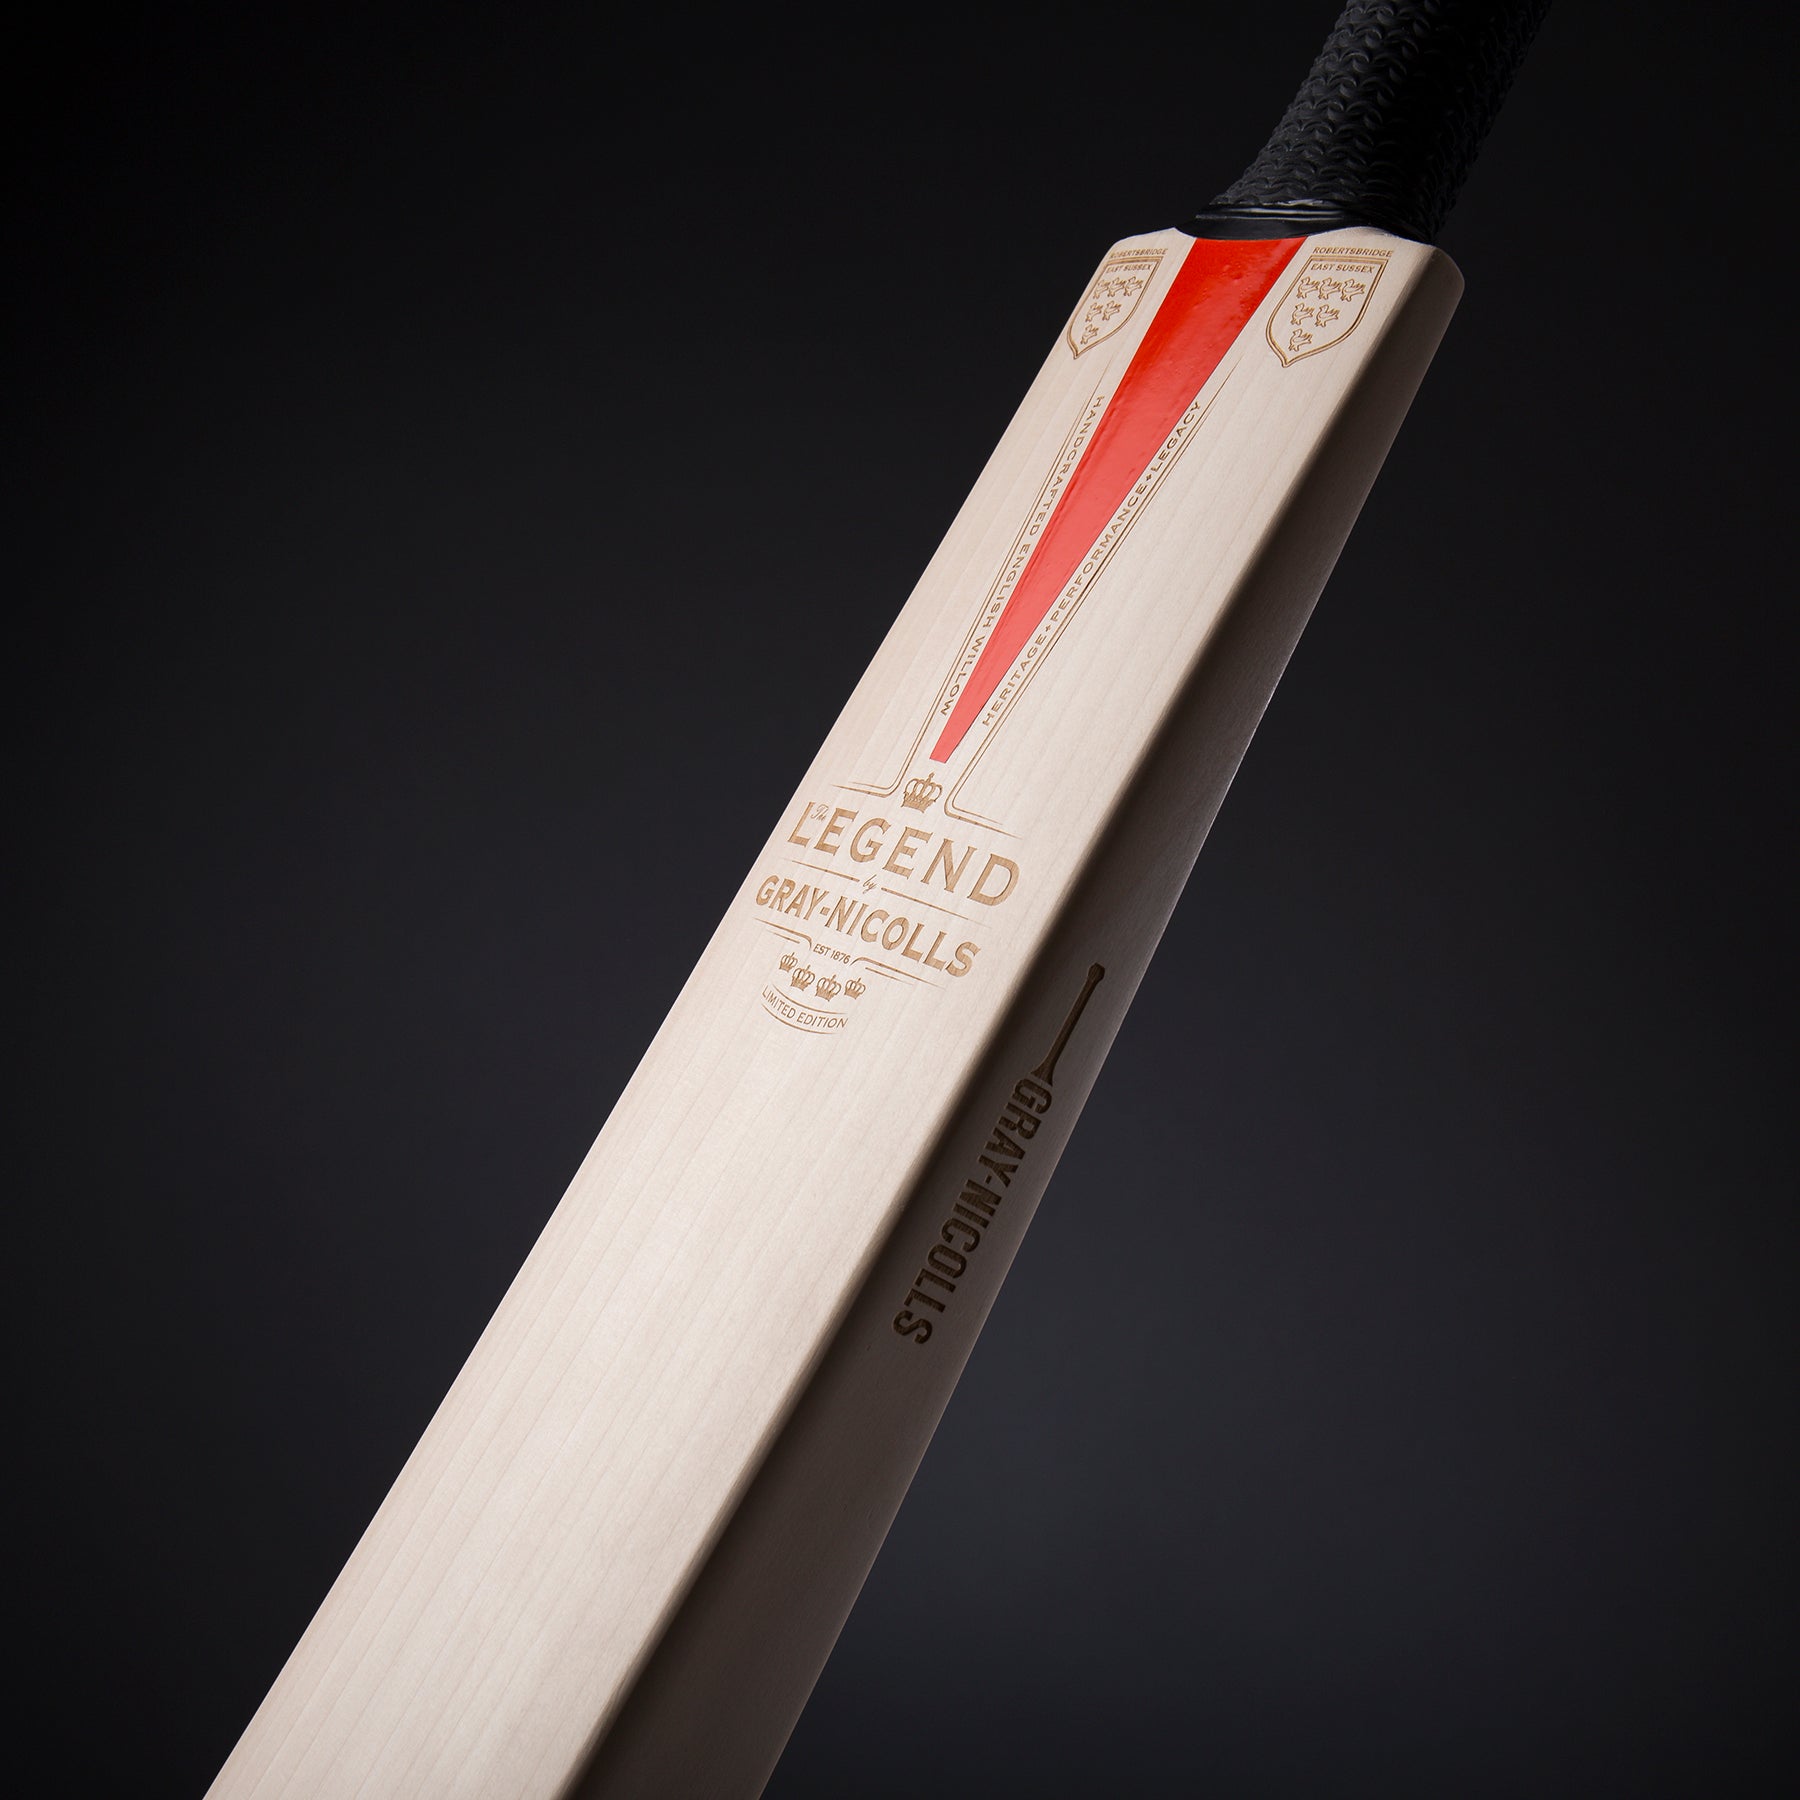 Gray Nicolls Maax GN2 Range Full Kit with Kashmir Willow Cricket Bat, Buy  Online India